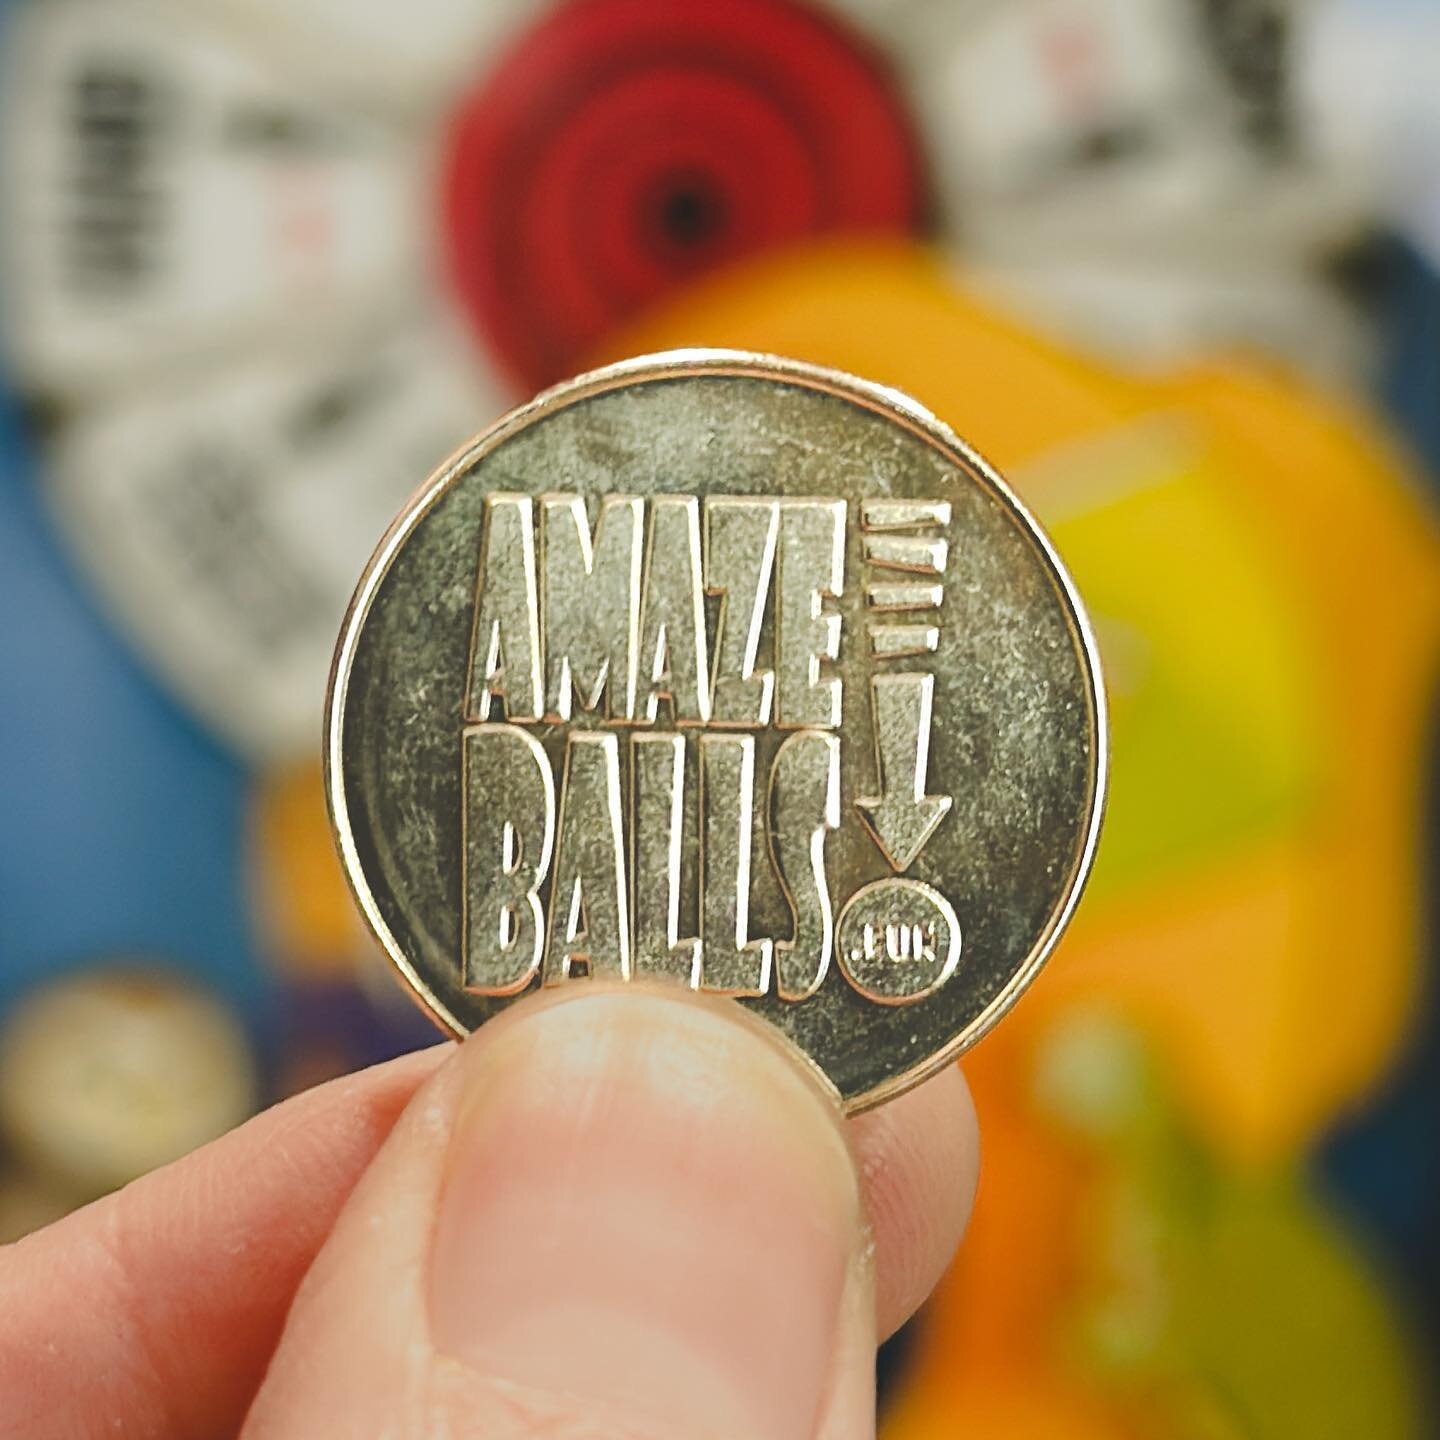 Amazeballs News!!! We are launching a new amazeballs project with a Sneak Peak @craftywonderland May 5+6. It&rsquo;s going to be Amazeballs. Literally. Follow us @amazeballs.fun 

#amazeballs.fun #pdxstartup #amazeballs #fortunesmeller #cwspringmarke